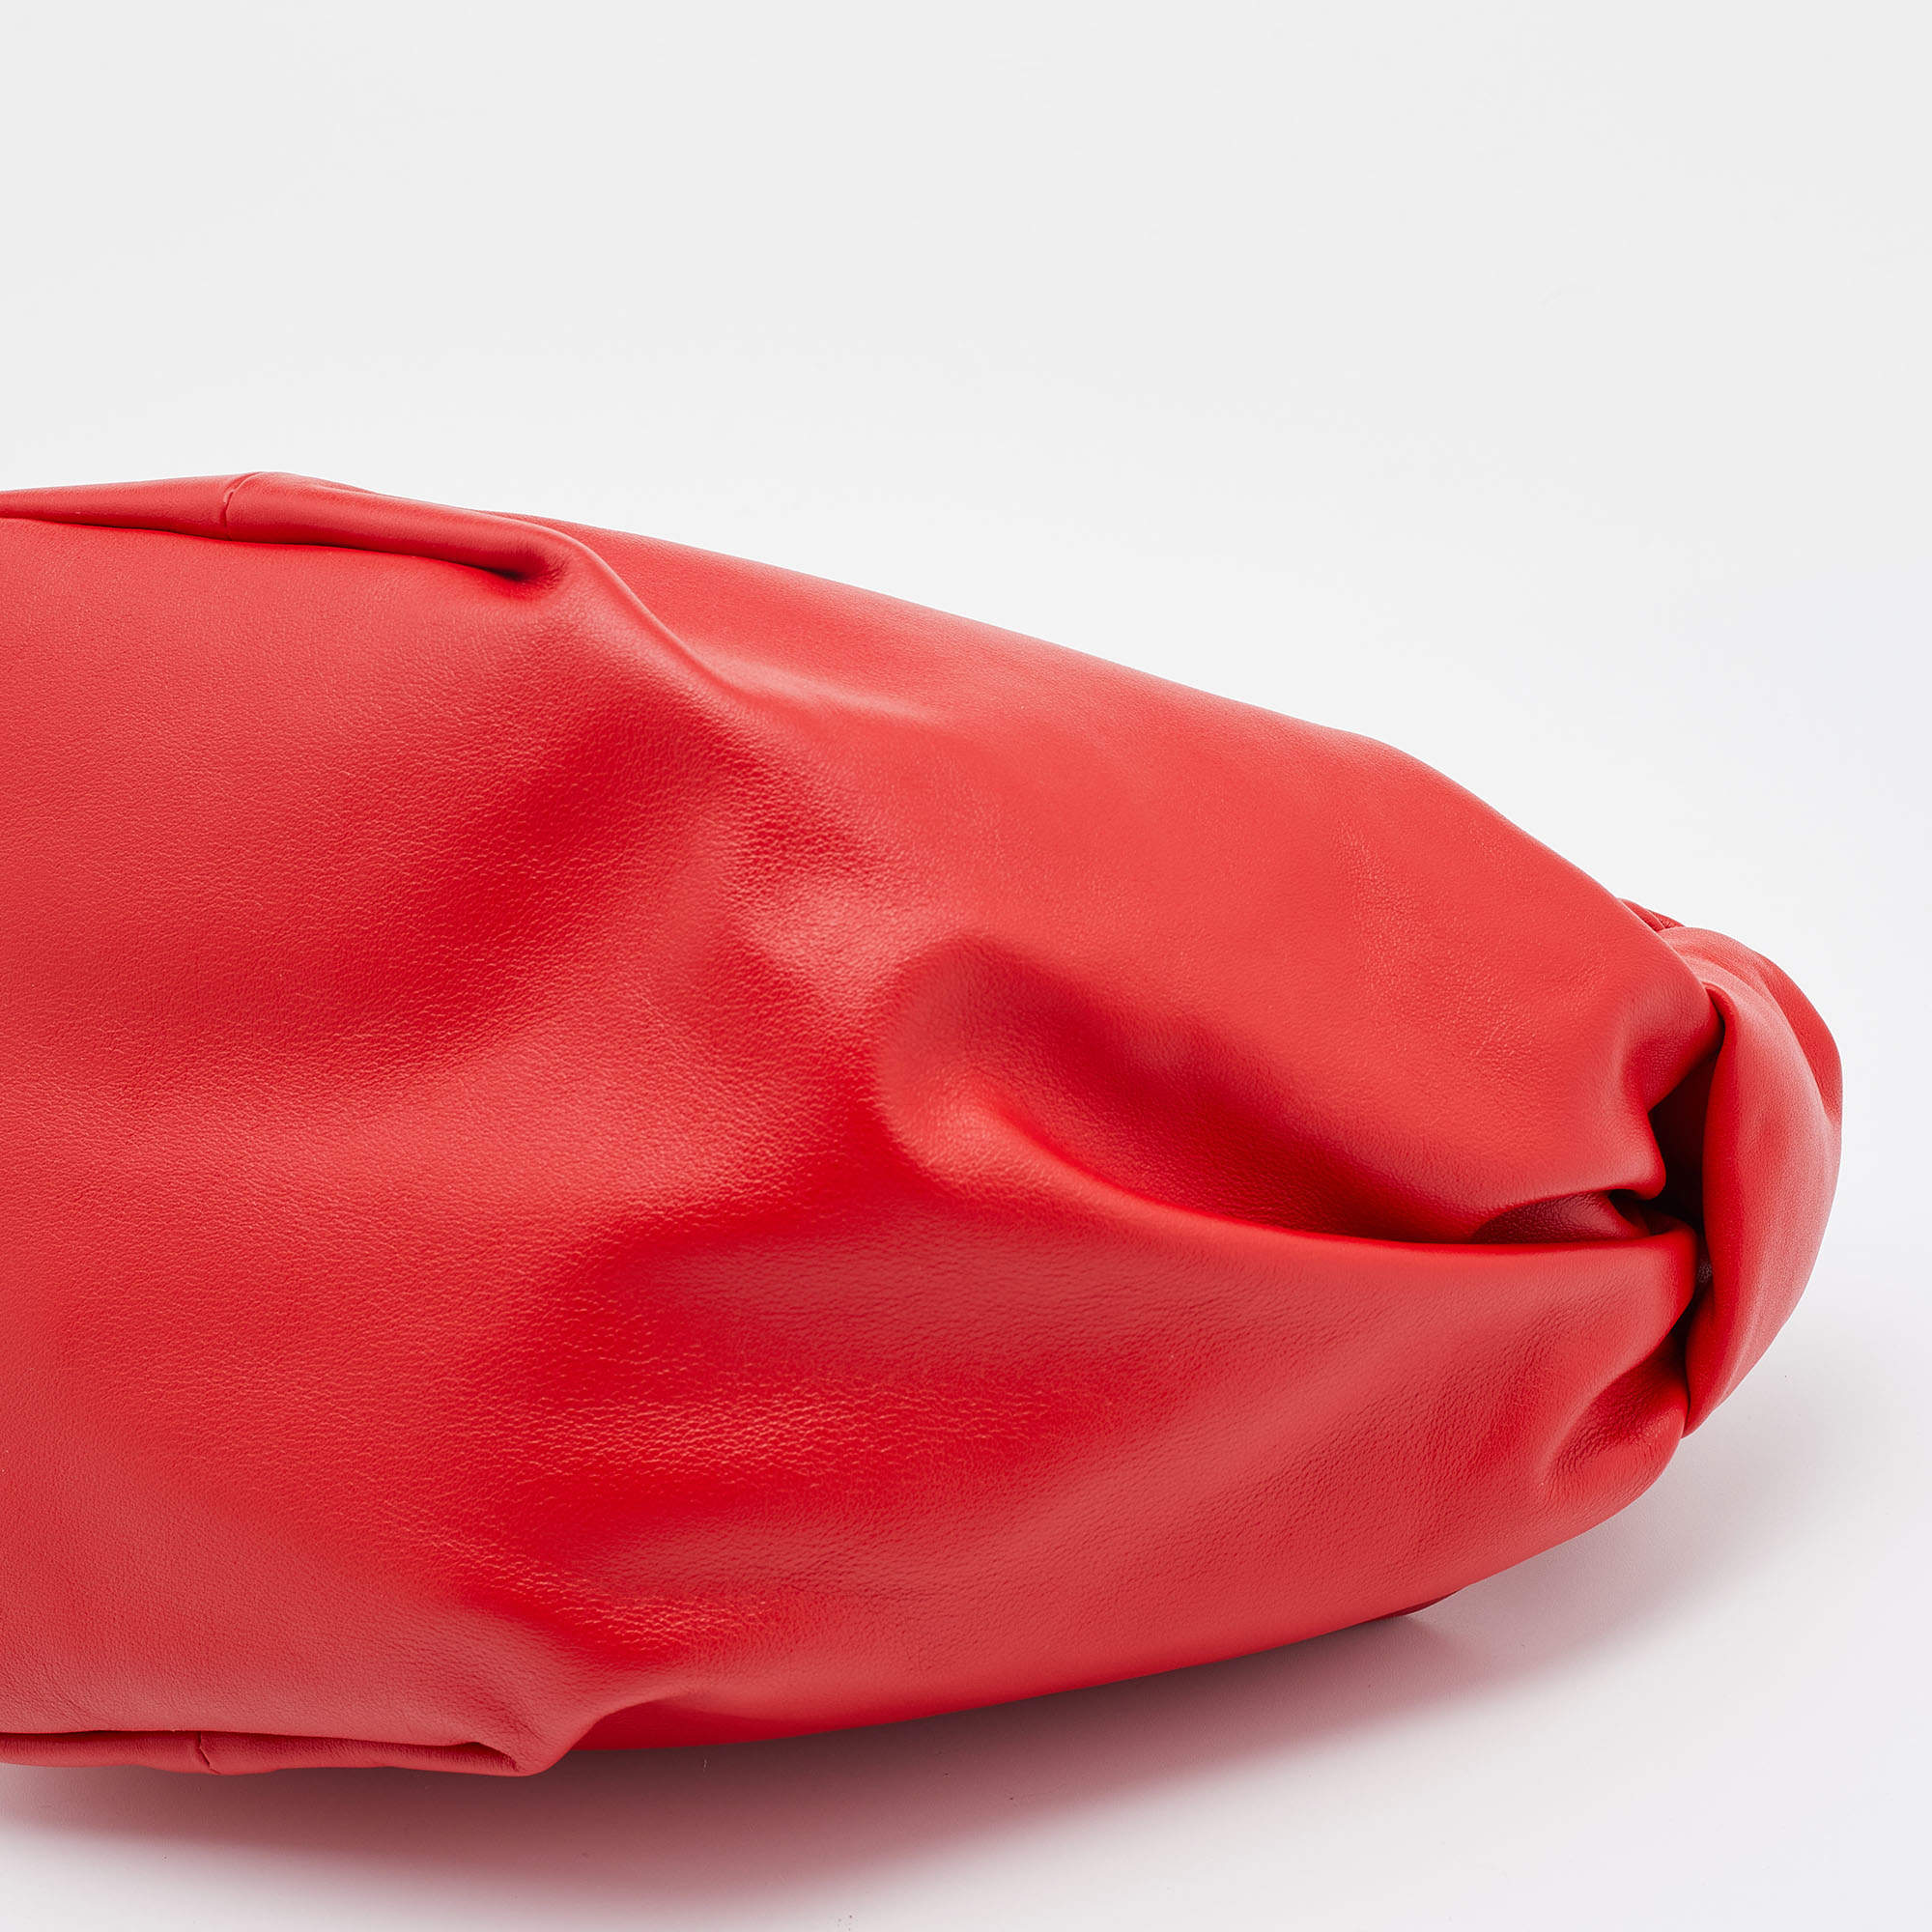 Double knot leather handbag Bottega Veneta Red in Leather - 31911717